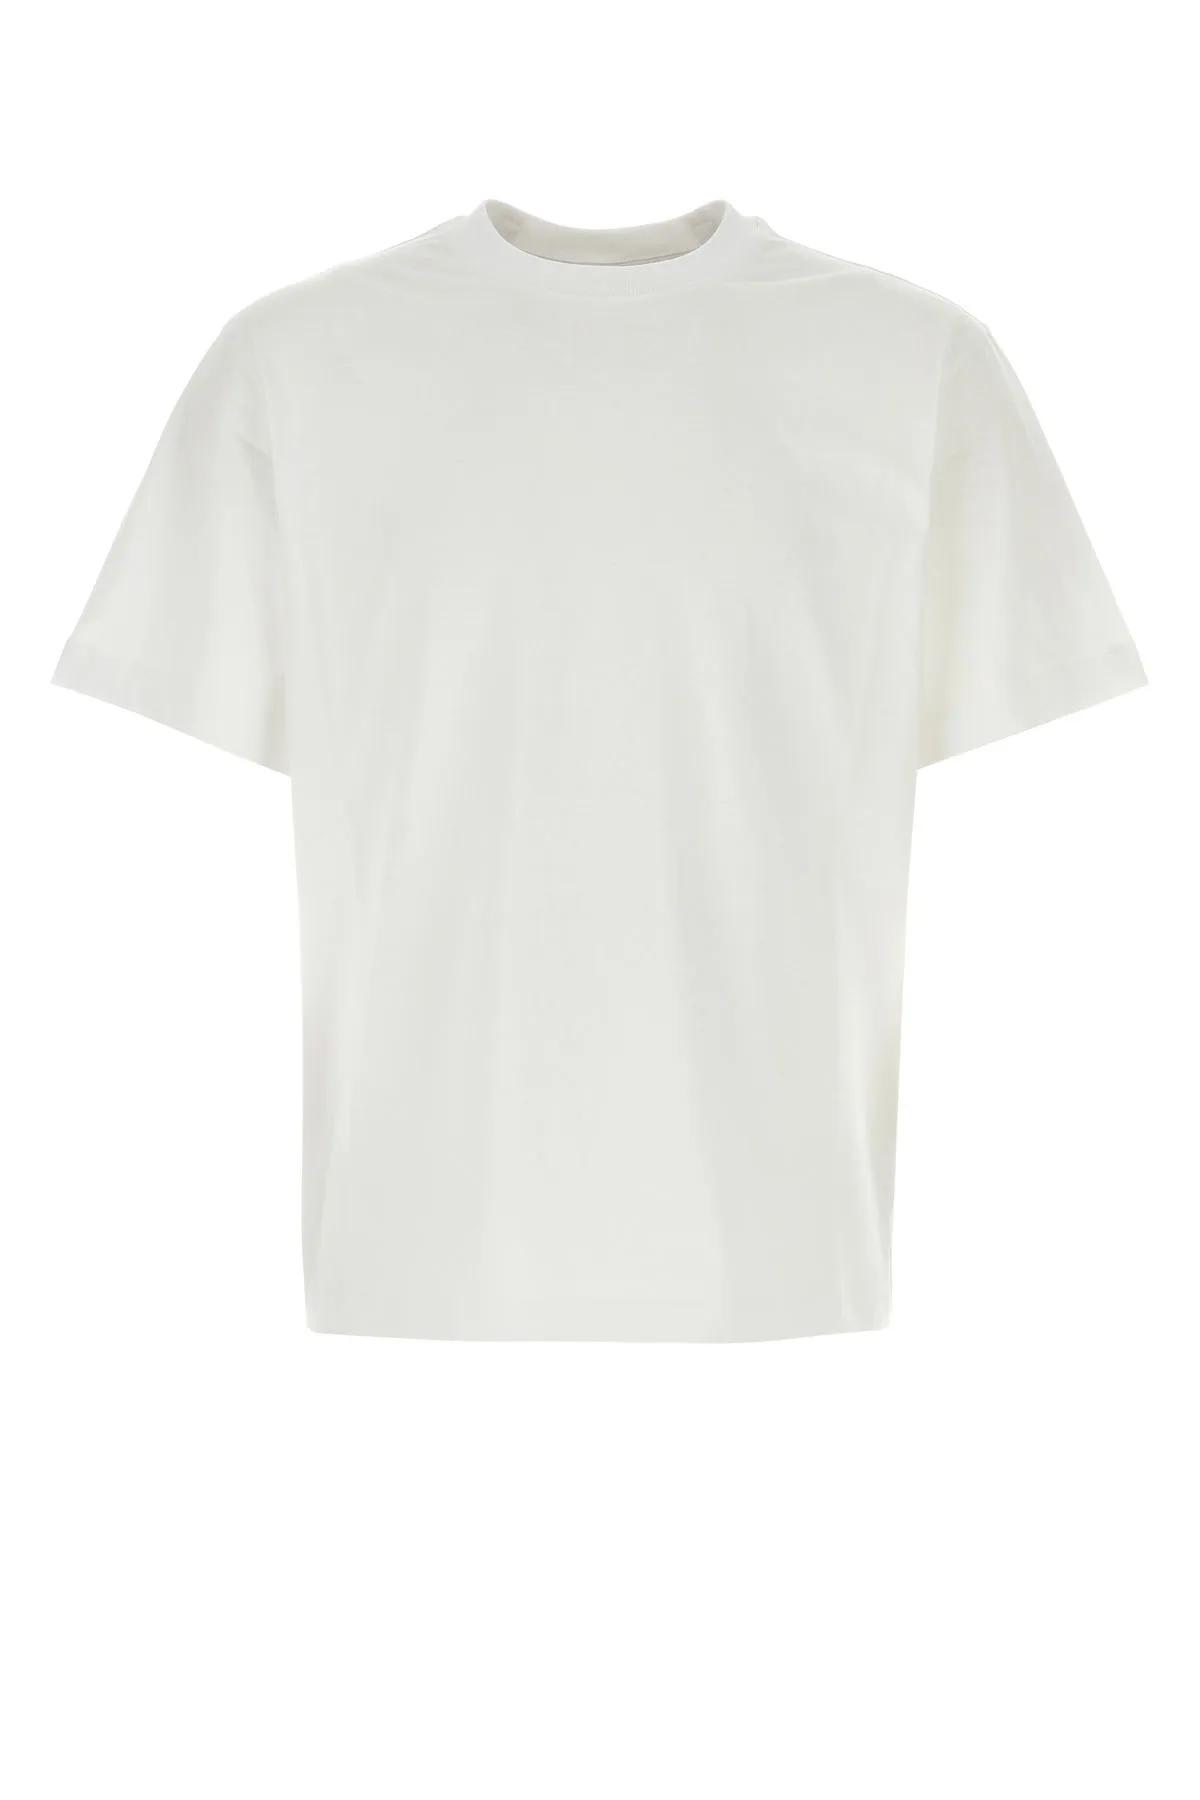 Shop Burberry White Stretch Cotton T-shirt